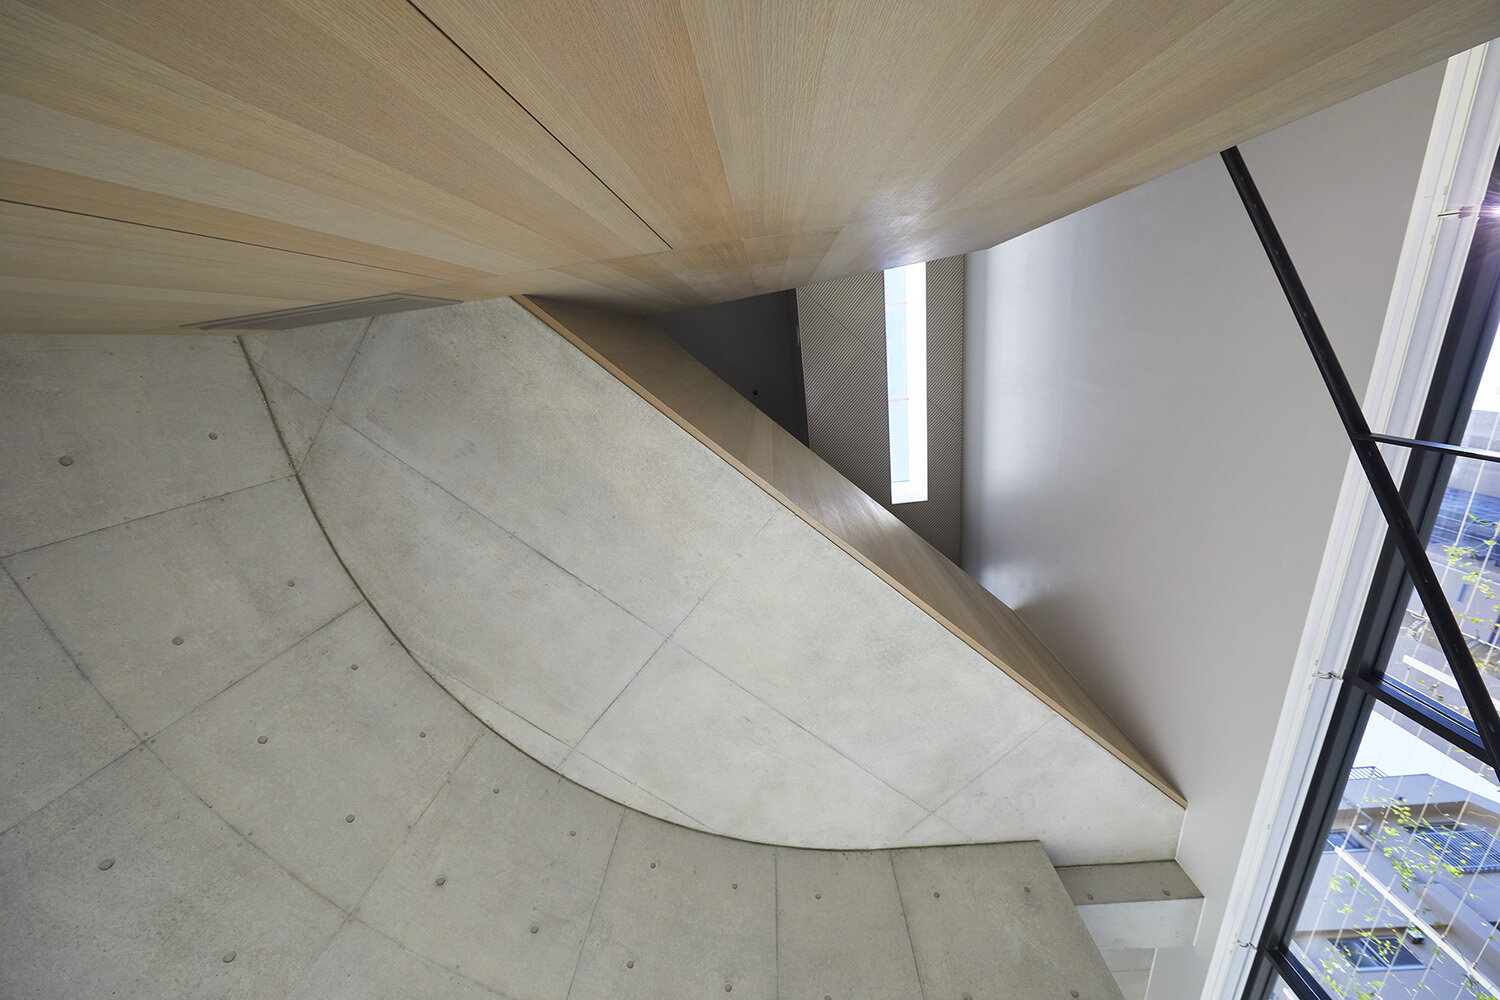  atrium of ‘Shoto S’, a residence designed by Japanese architecture design studio SINATO led by Chikara Ono. 